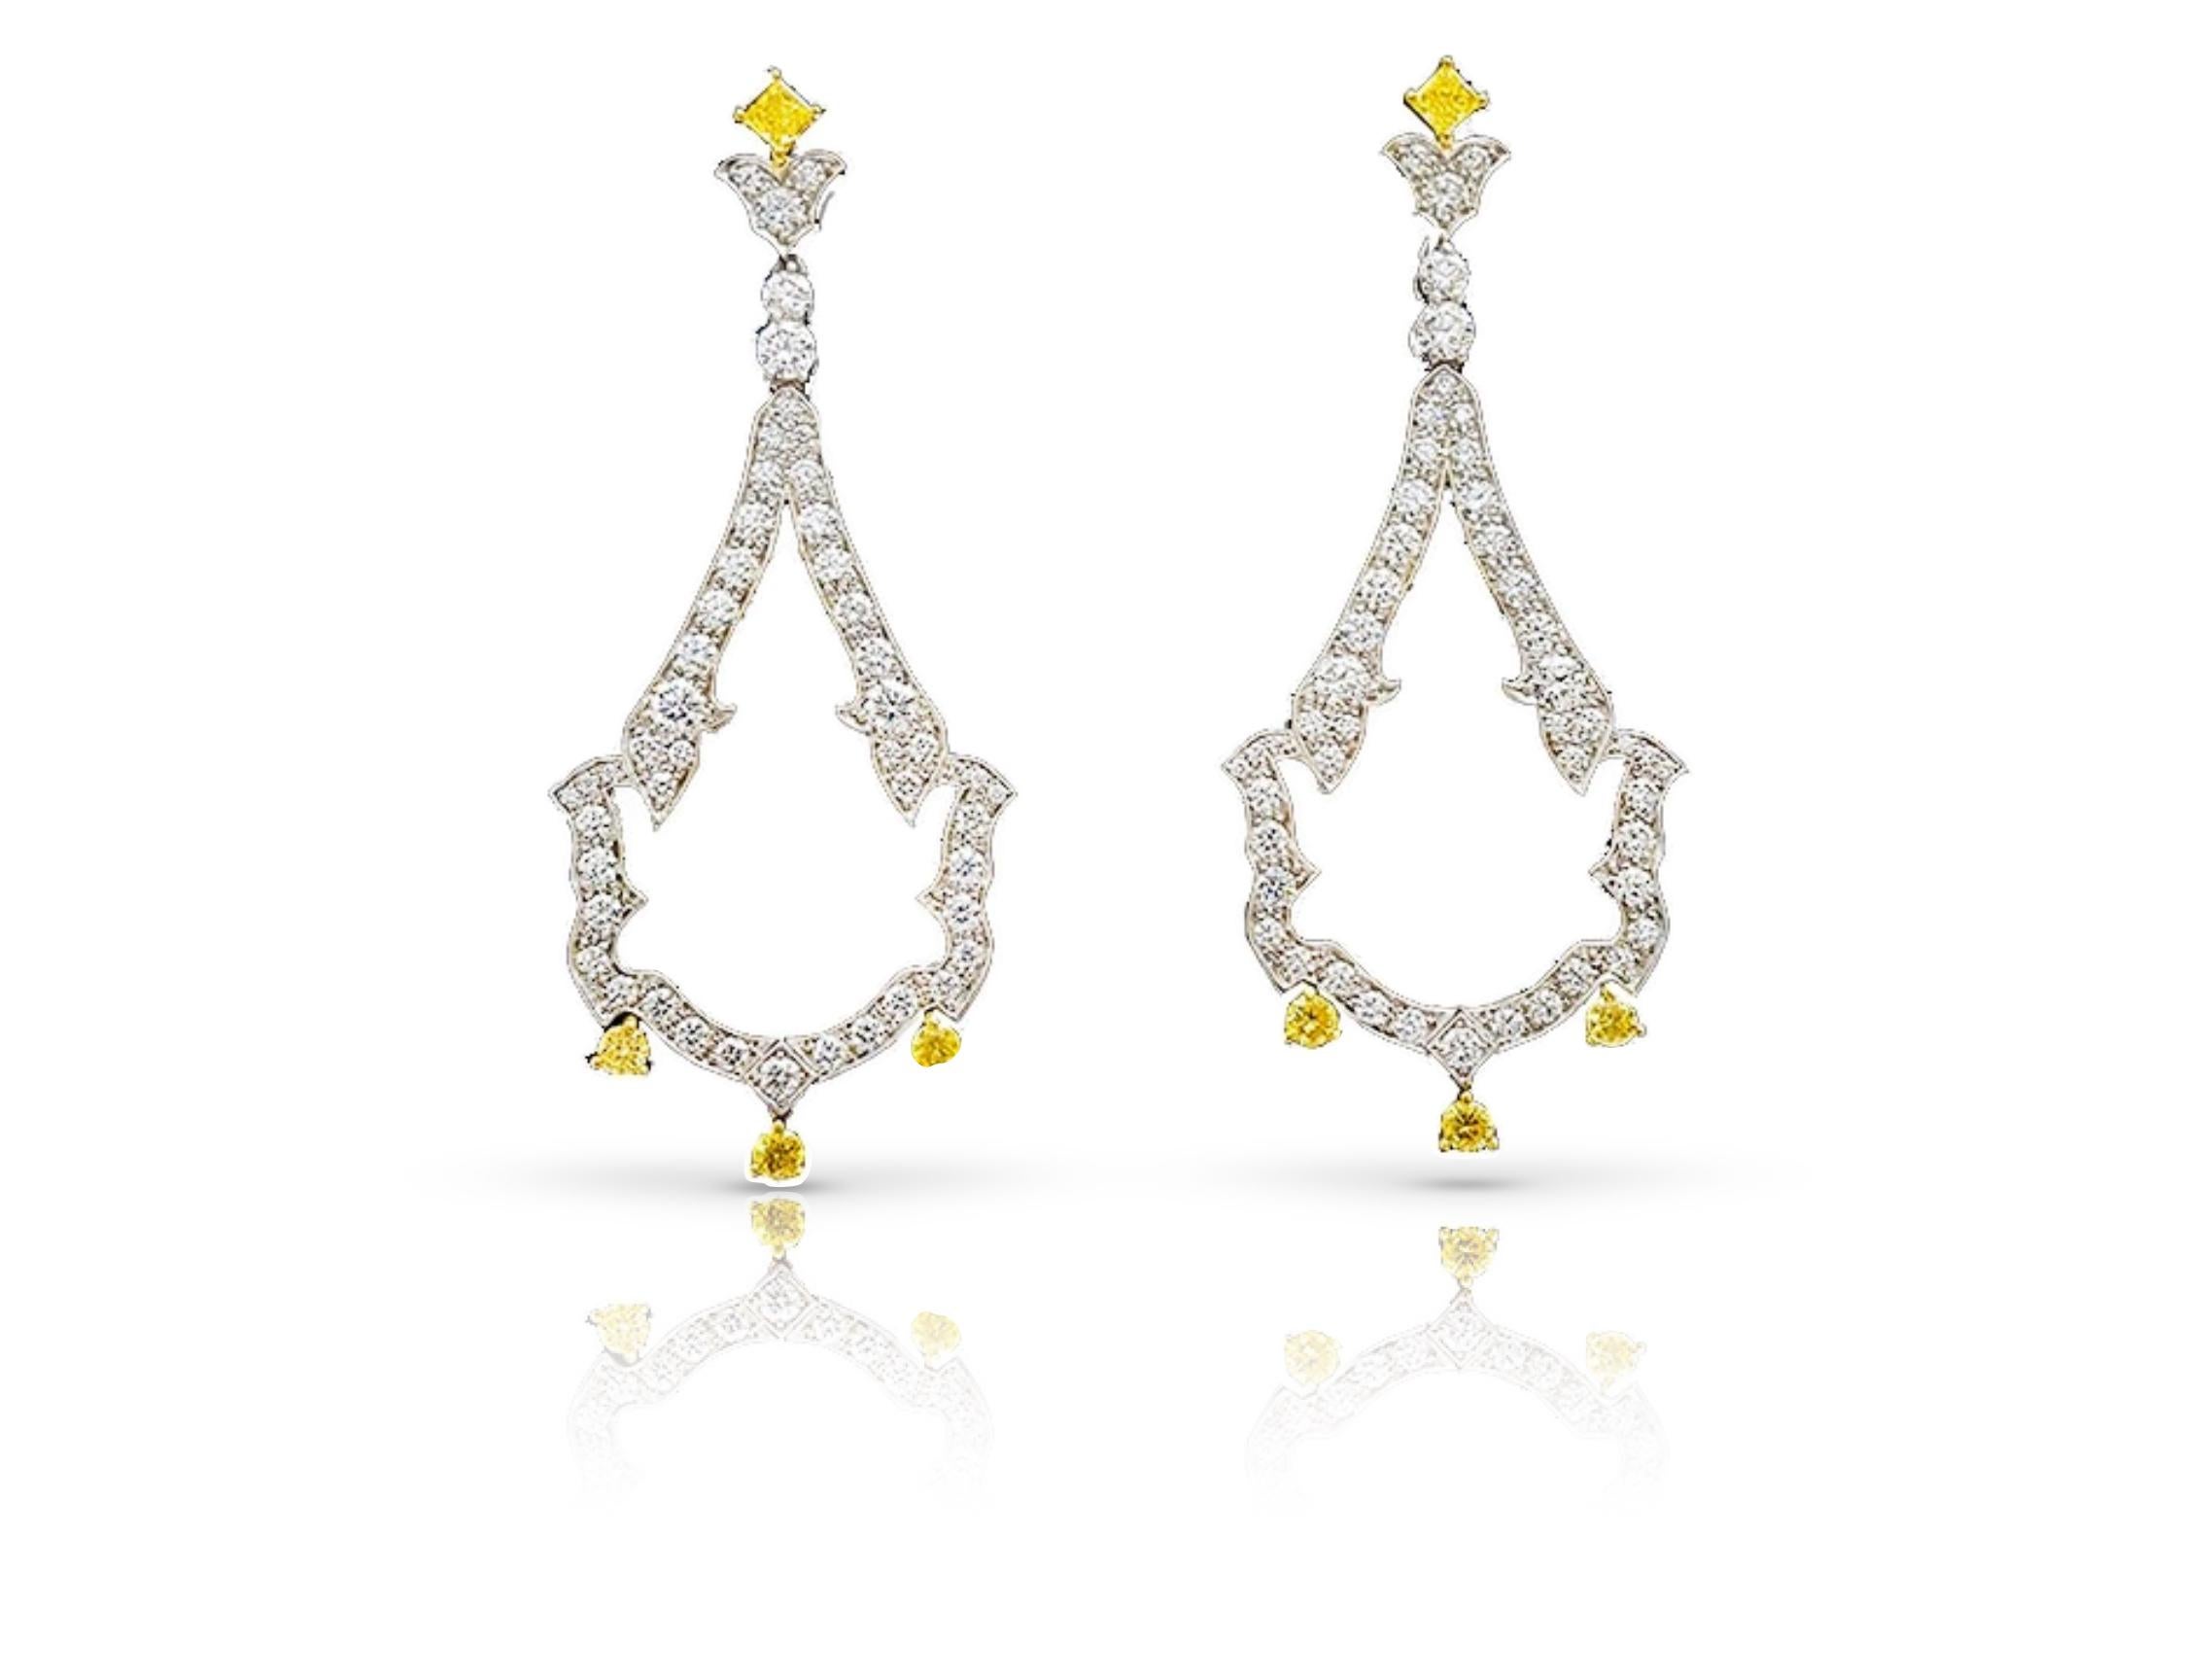 Round Cut 3.12 Carat Yellow Diamond & White Diamond Open-Work Dangle Earrings in 18K Gold. For Sale